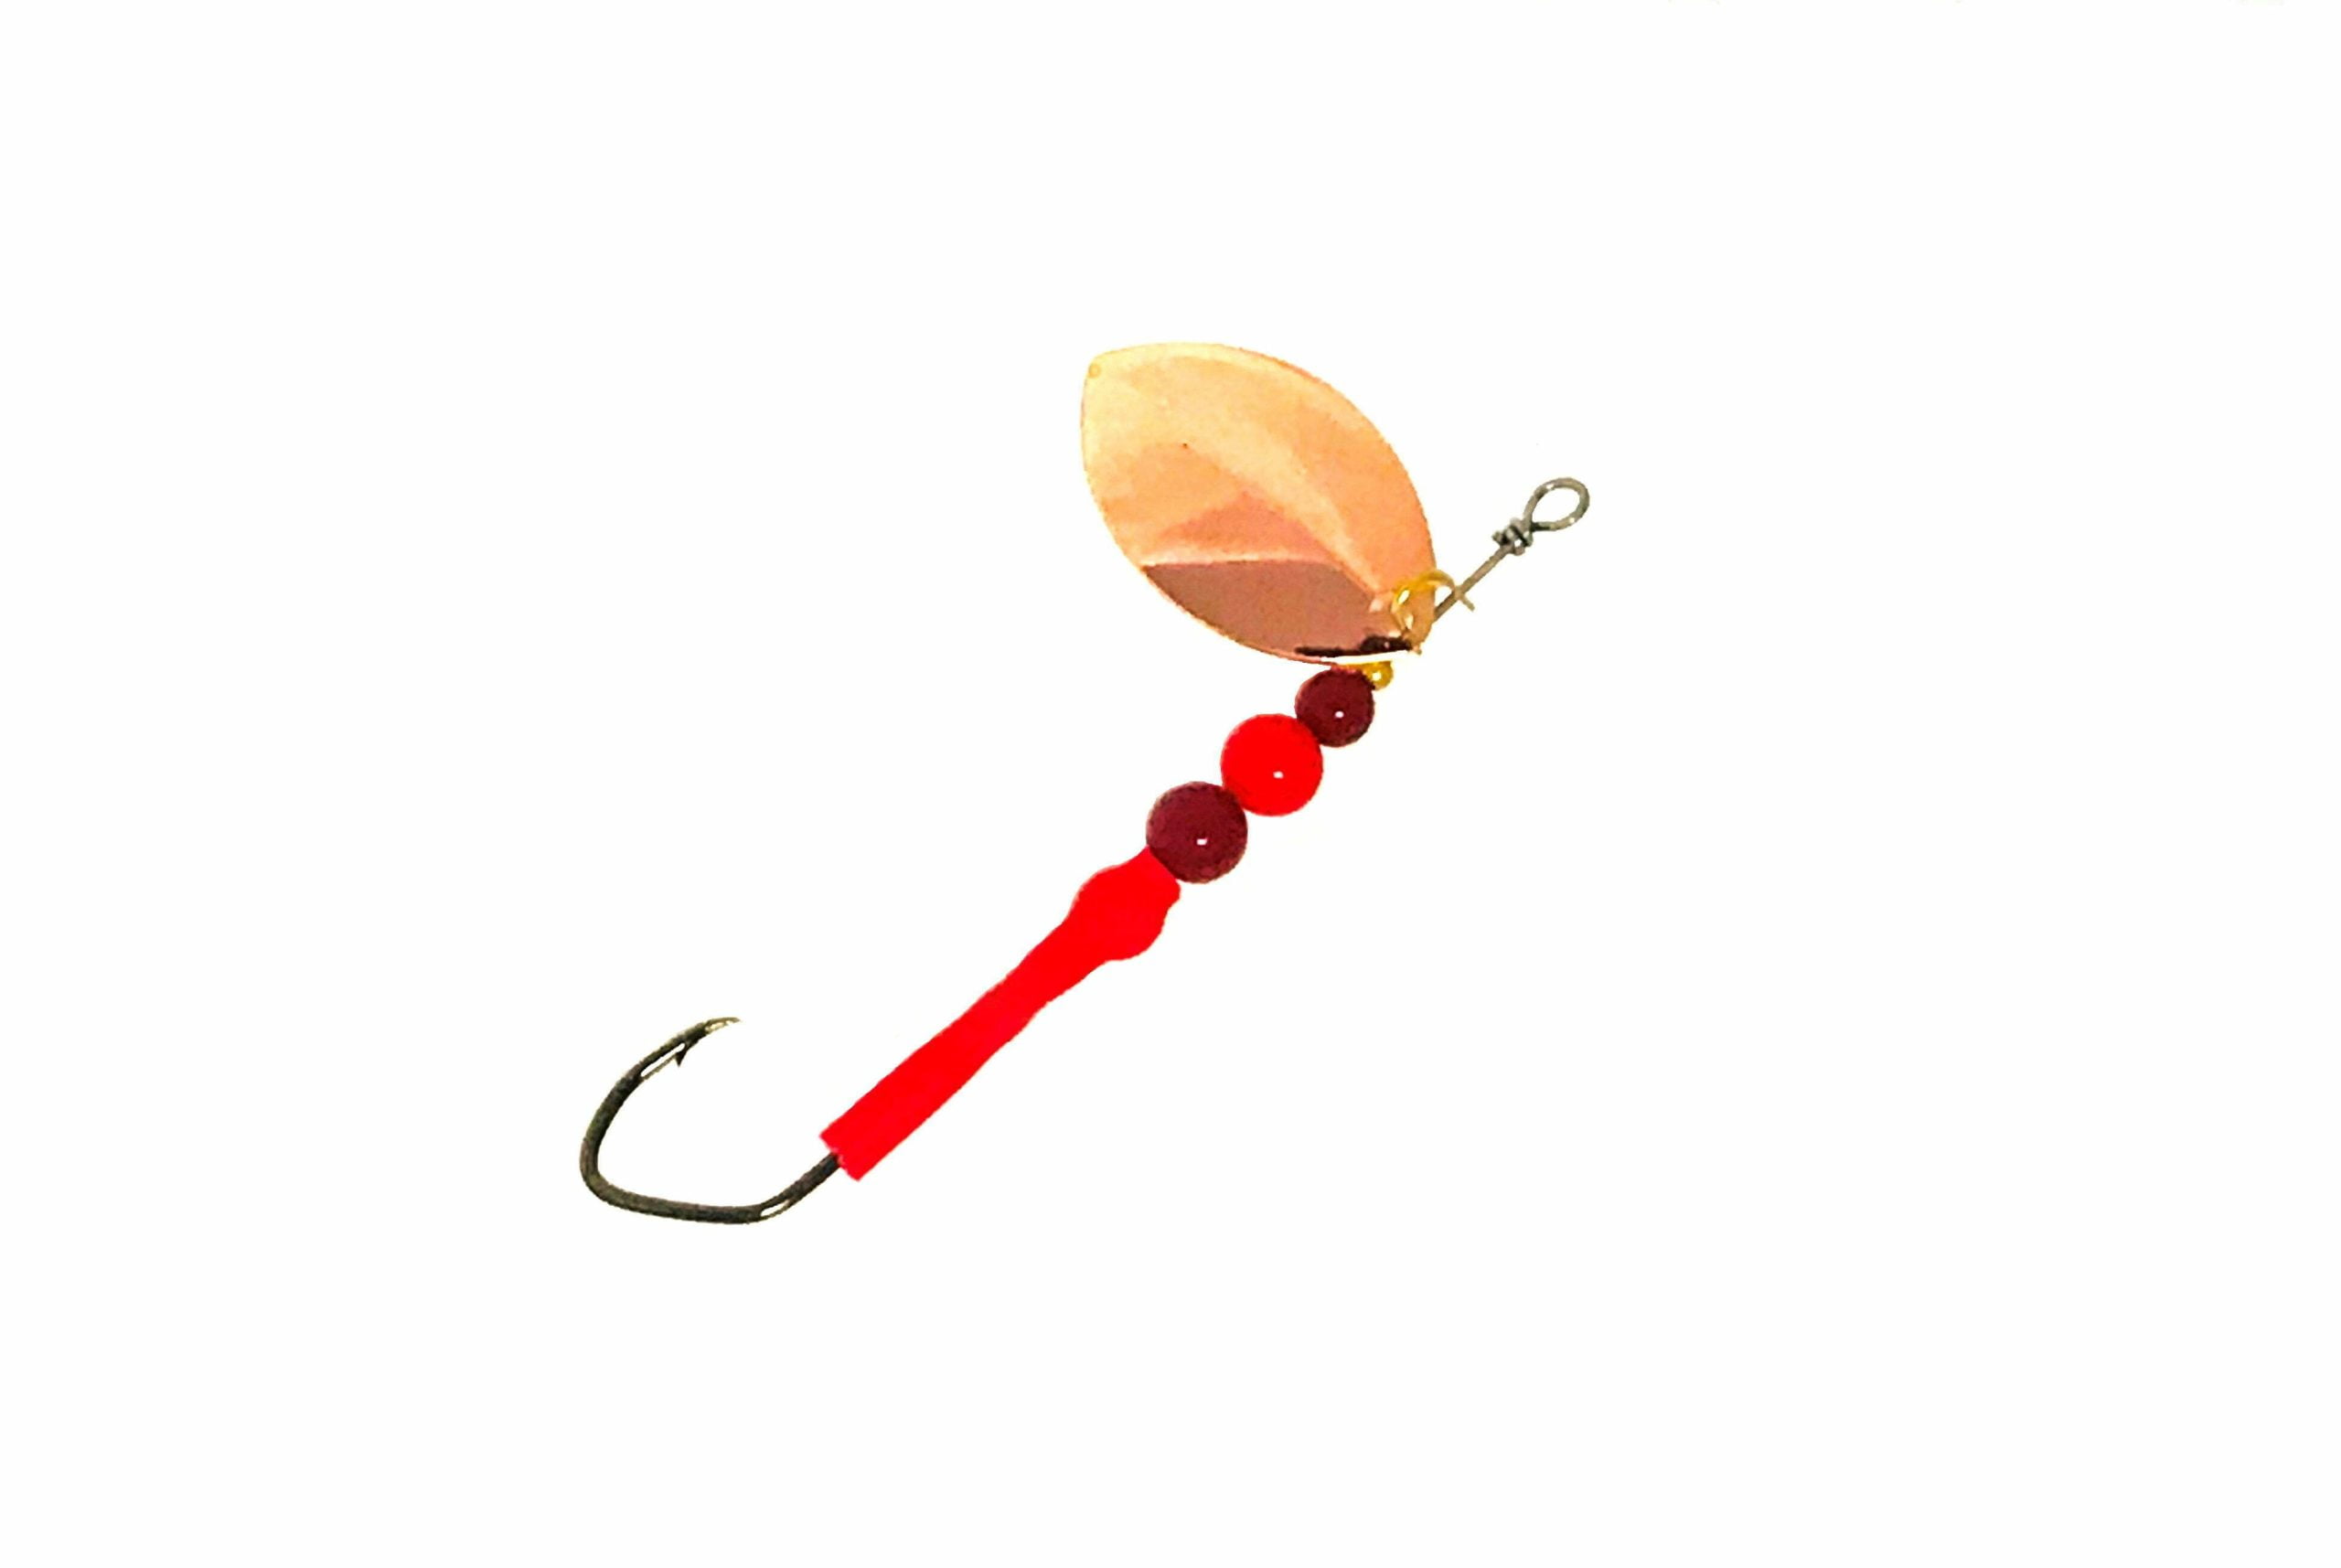 Gamakatsu Trout Treble Hook-4 per Pack (Red, 14)